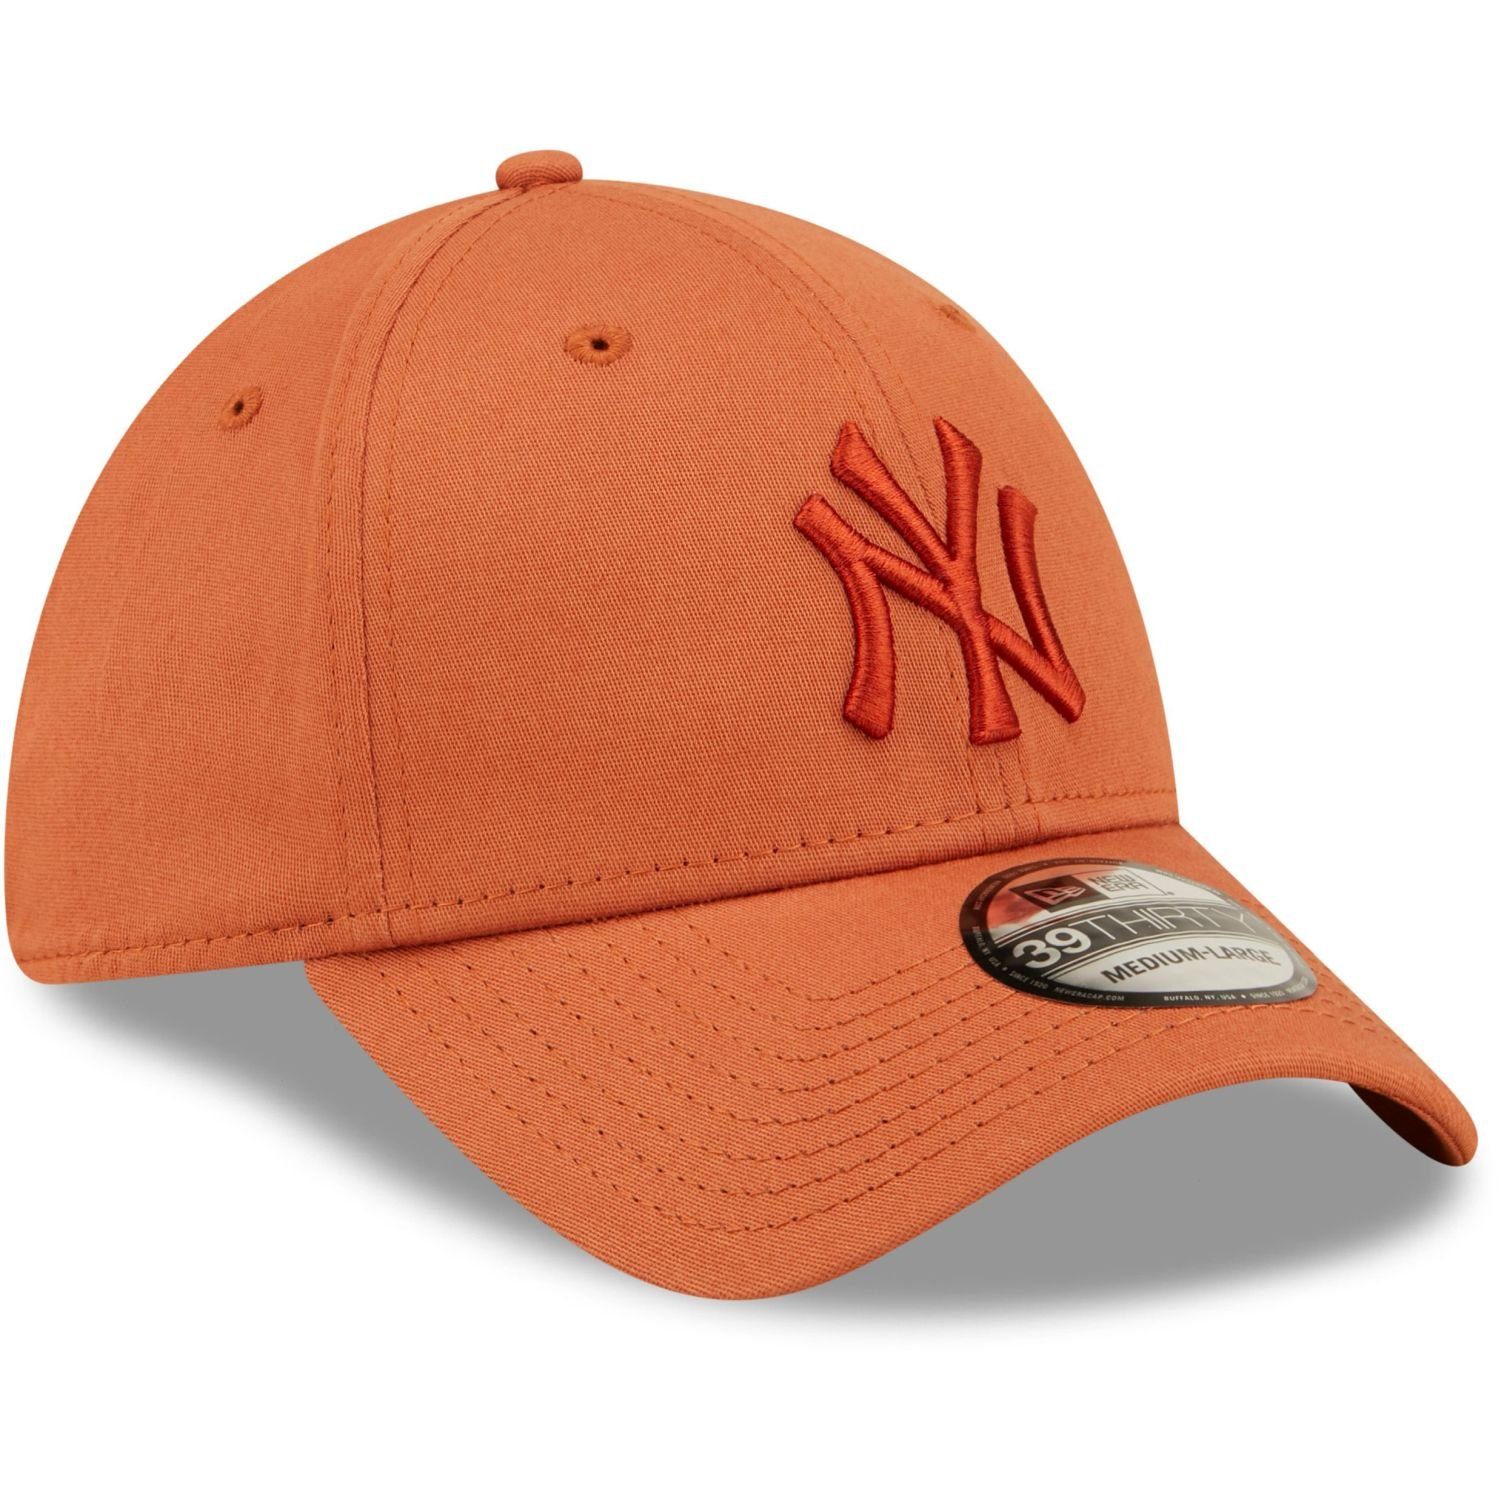 New Stretch York orange Flex Era 39Thirty Yankees New Cap